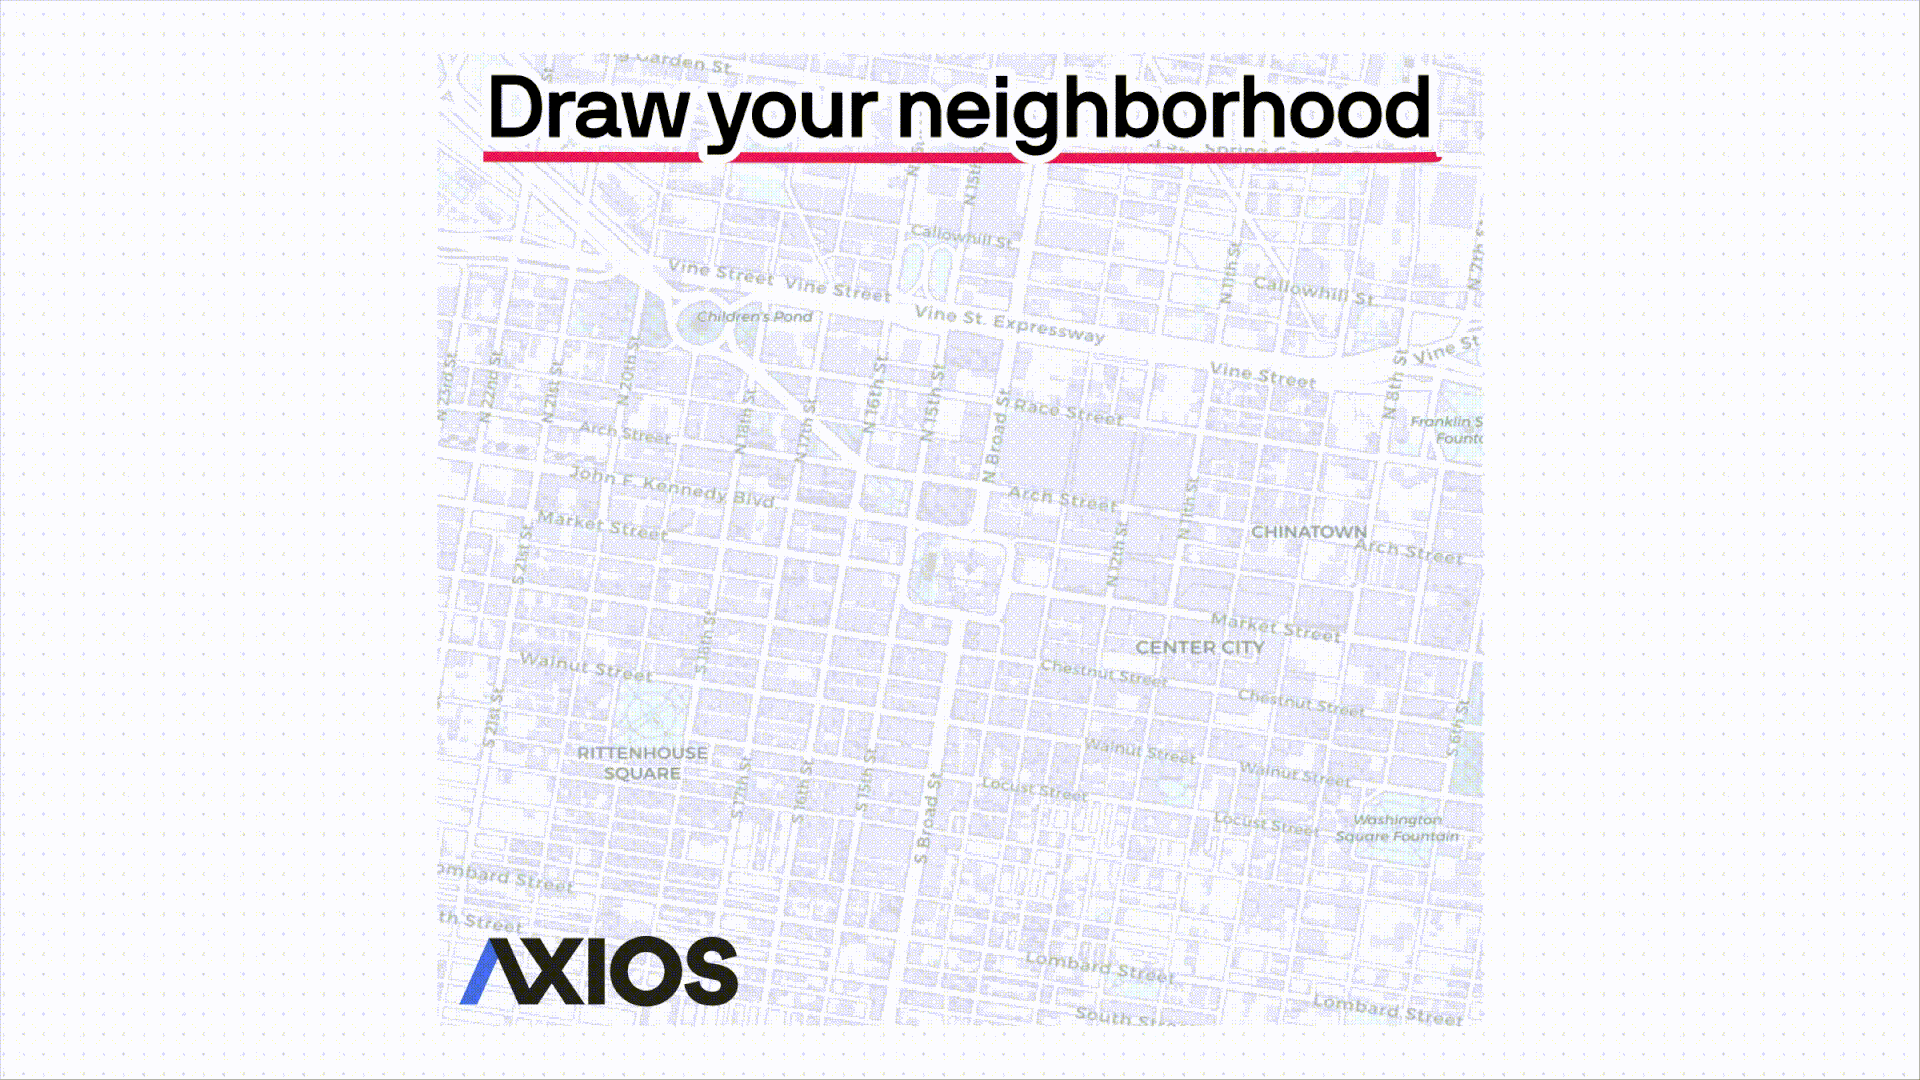 A GIF of neighborhood boundaries being drawn